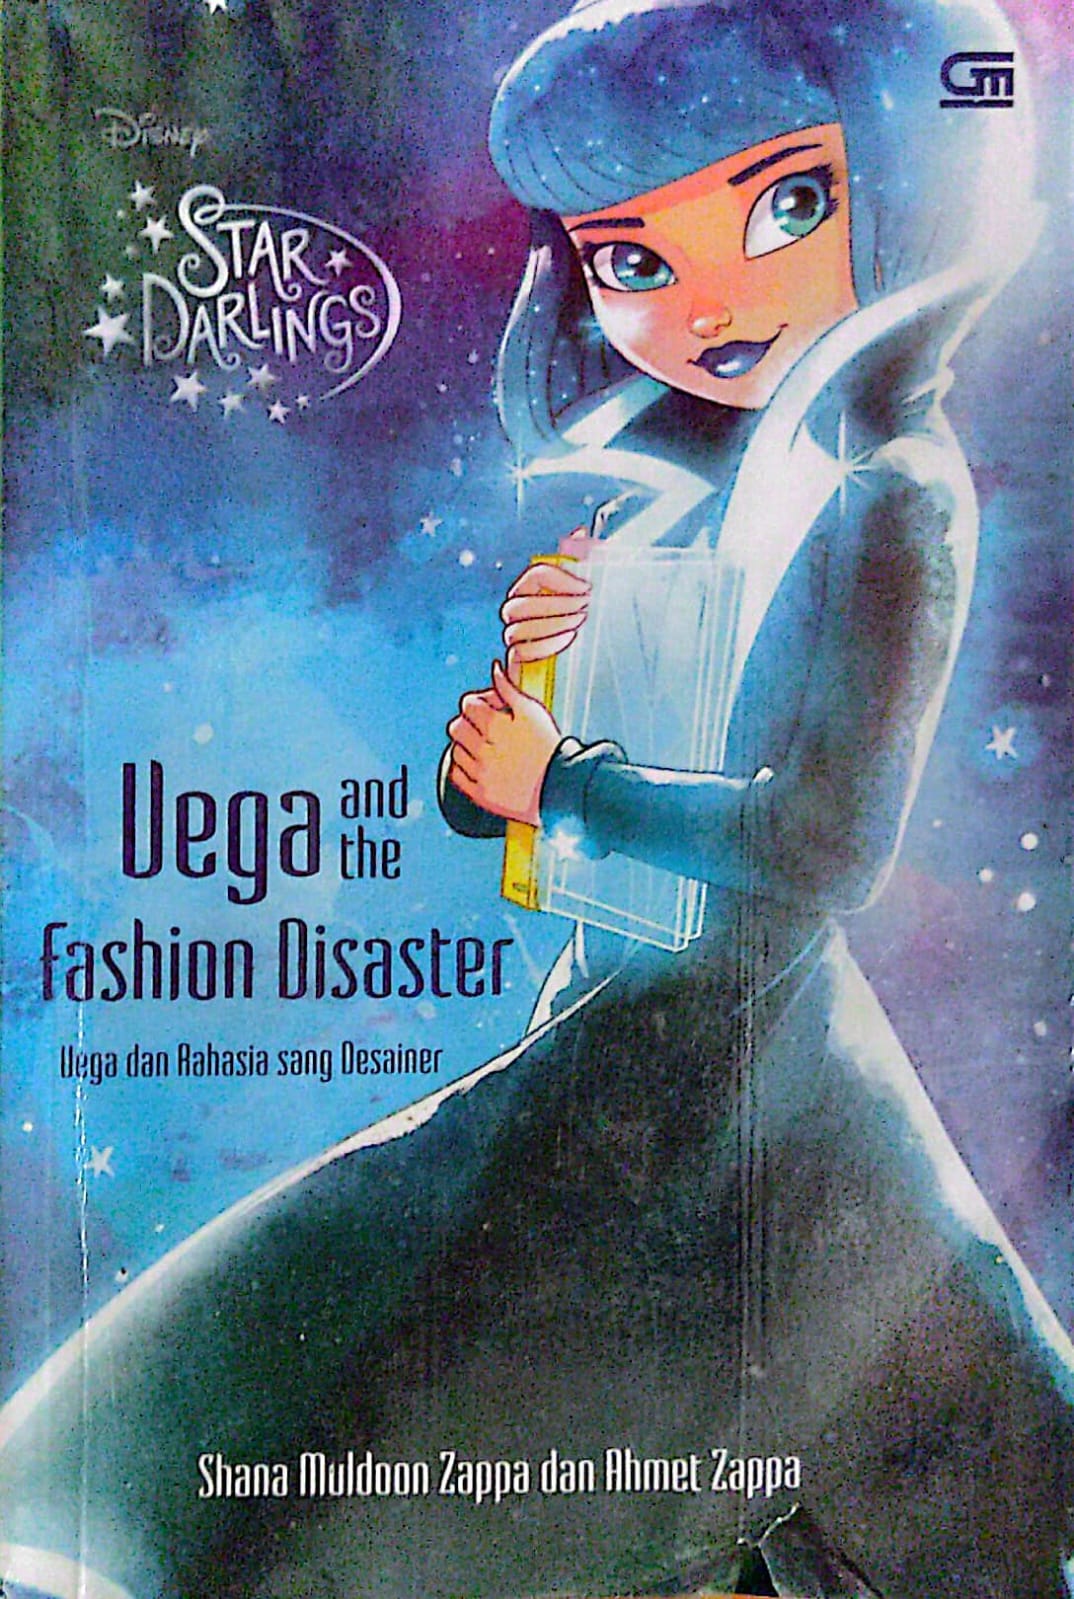 Star darling : vega and the fashion disaster